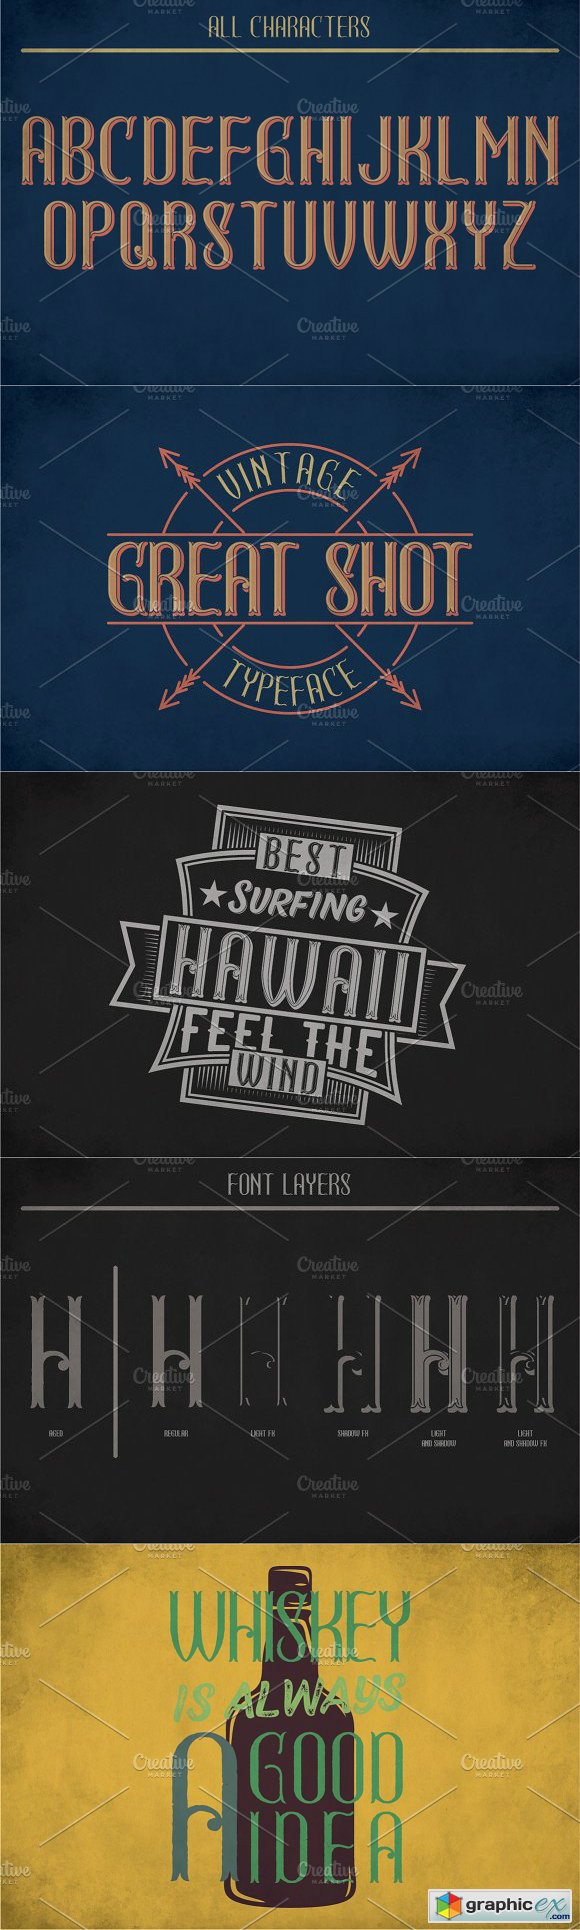 GreatShot Label Typeface font